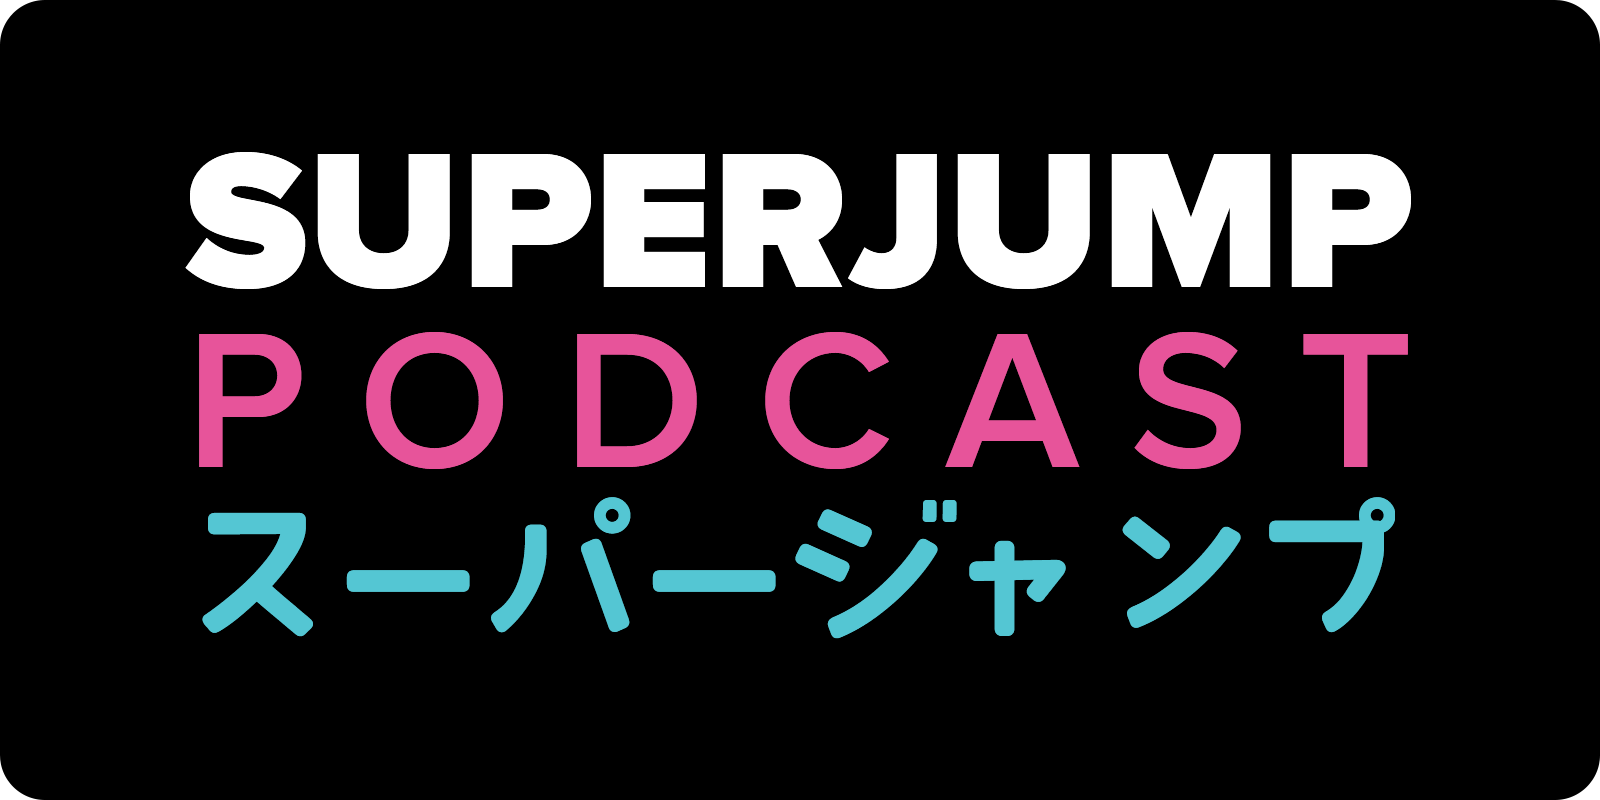 SUPERJUMP Podcast: Narrative vs. Gameplay